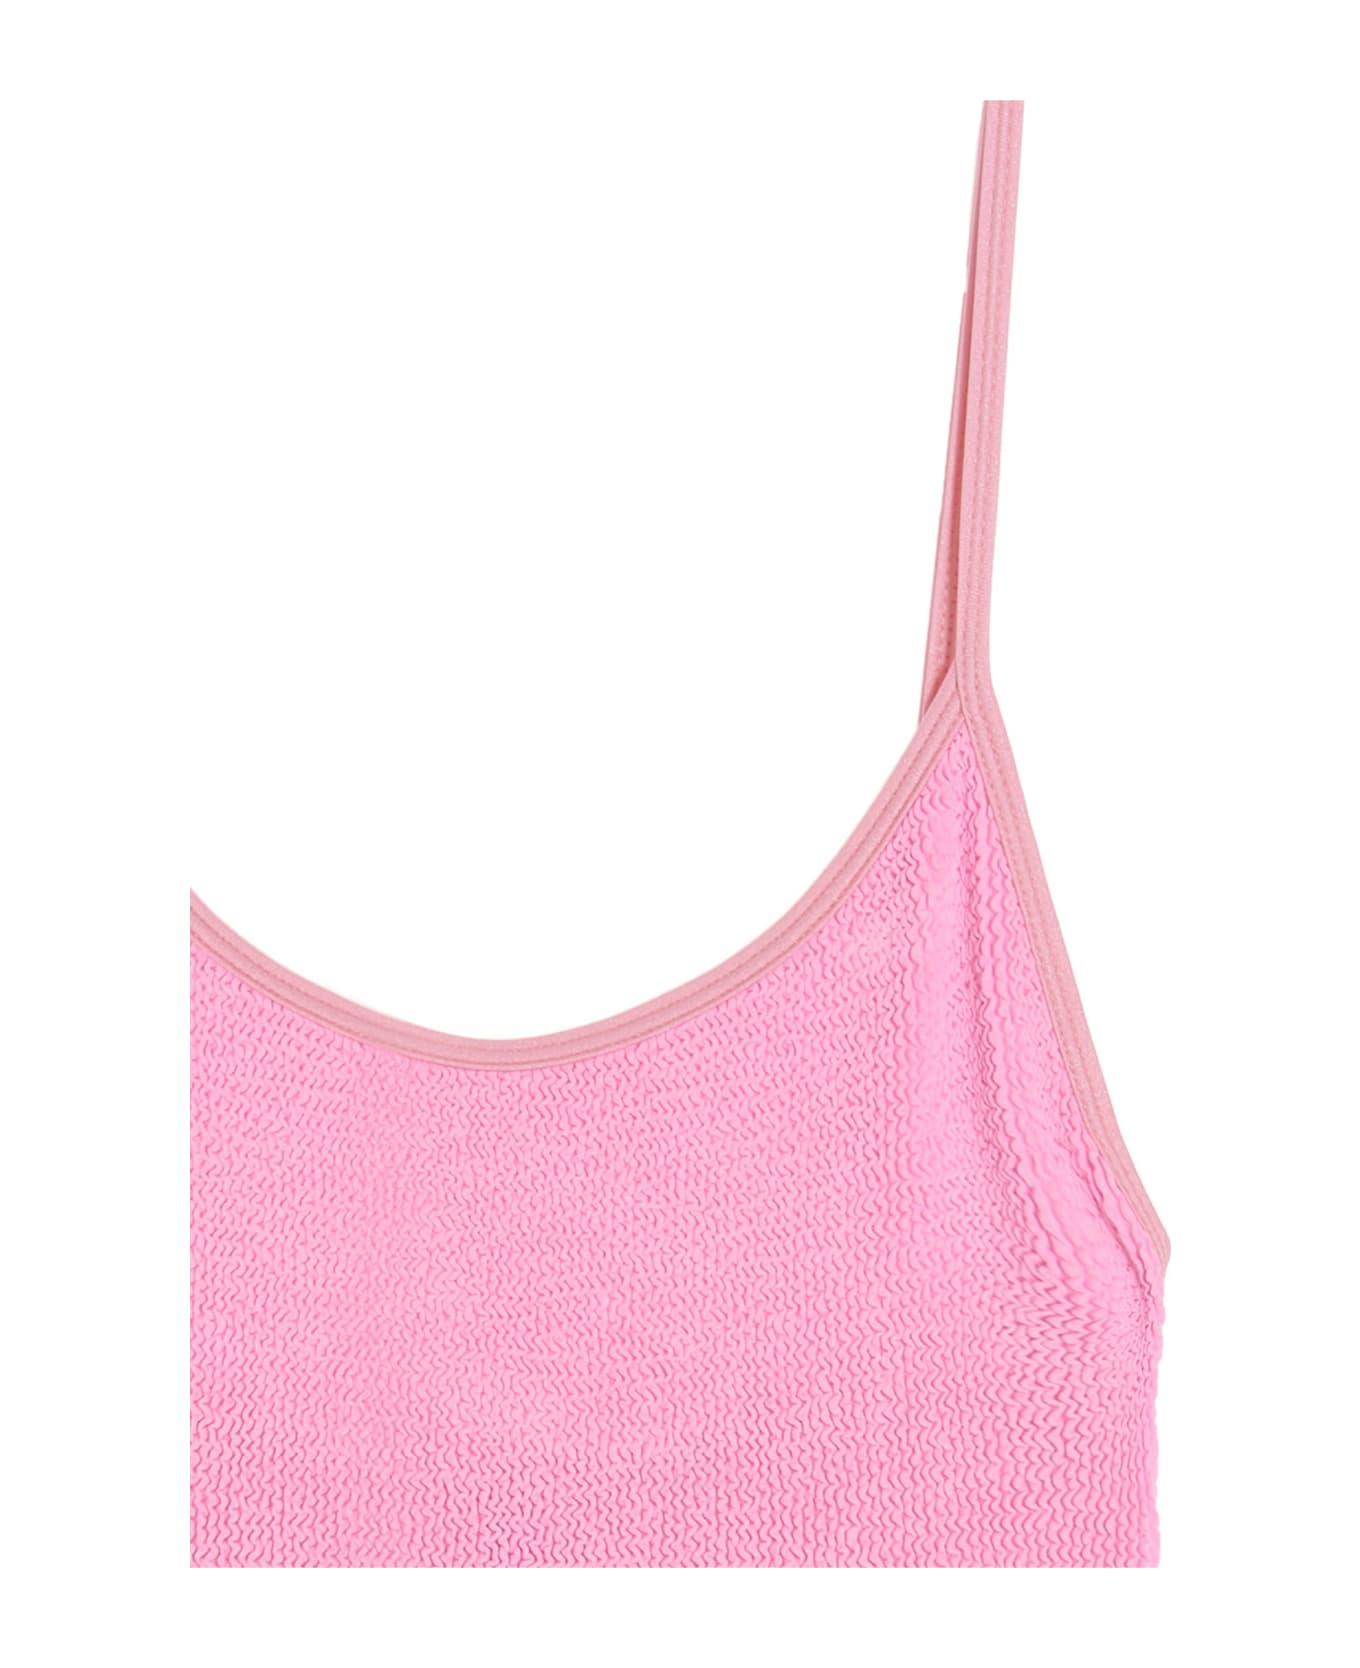 Hunza G 'pamela' One-piece Swimsuit - Pink 水着